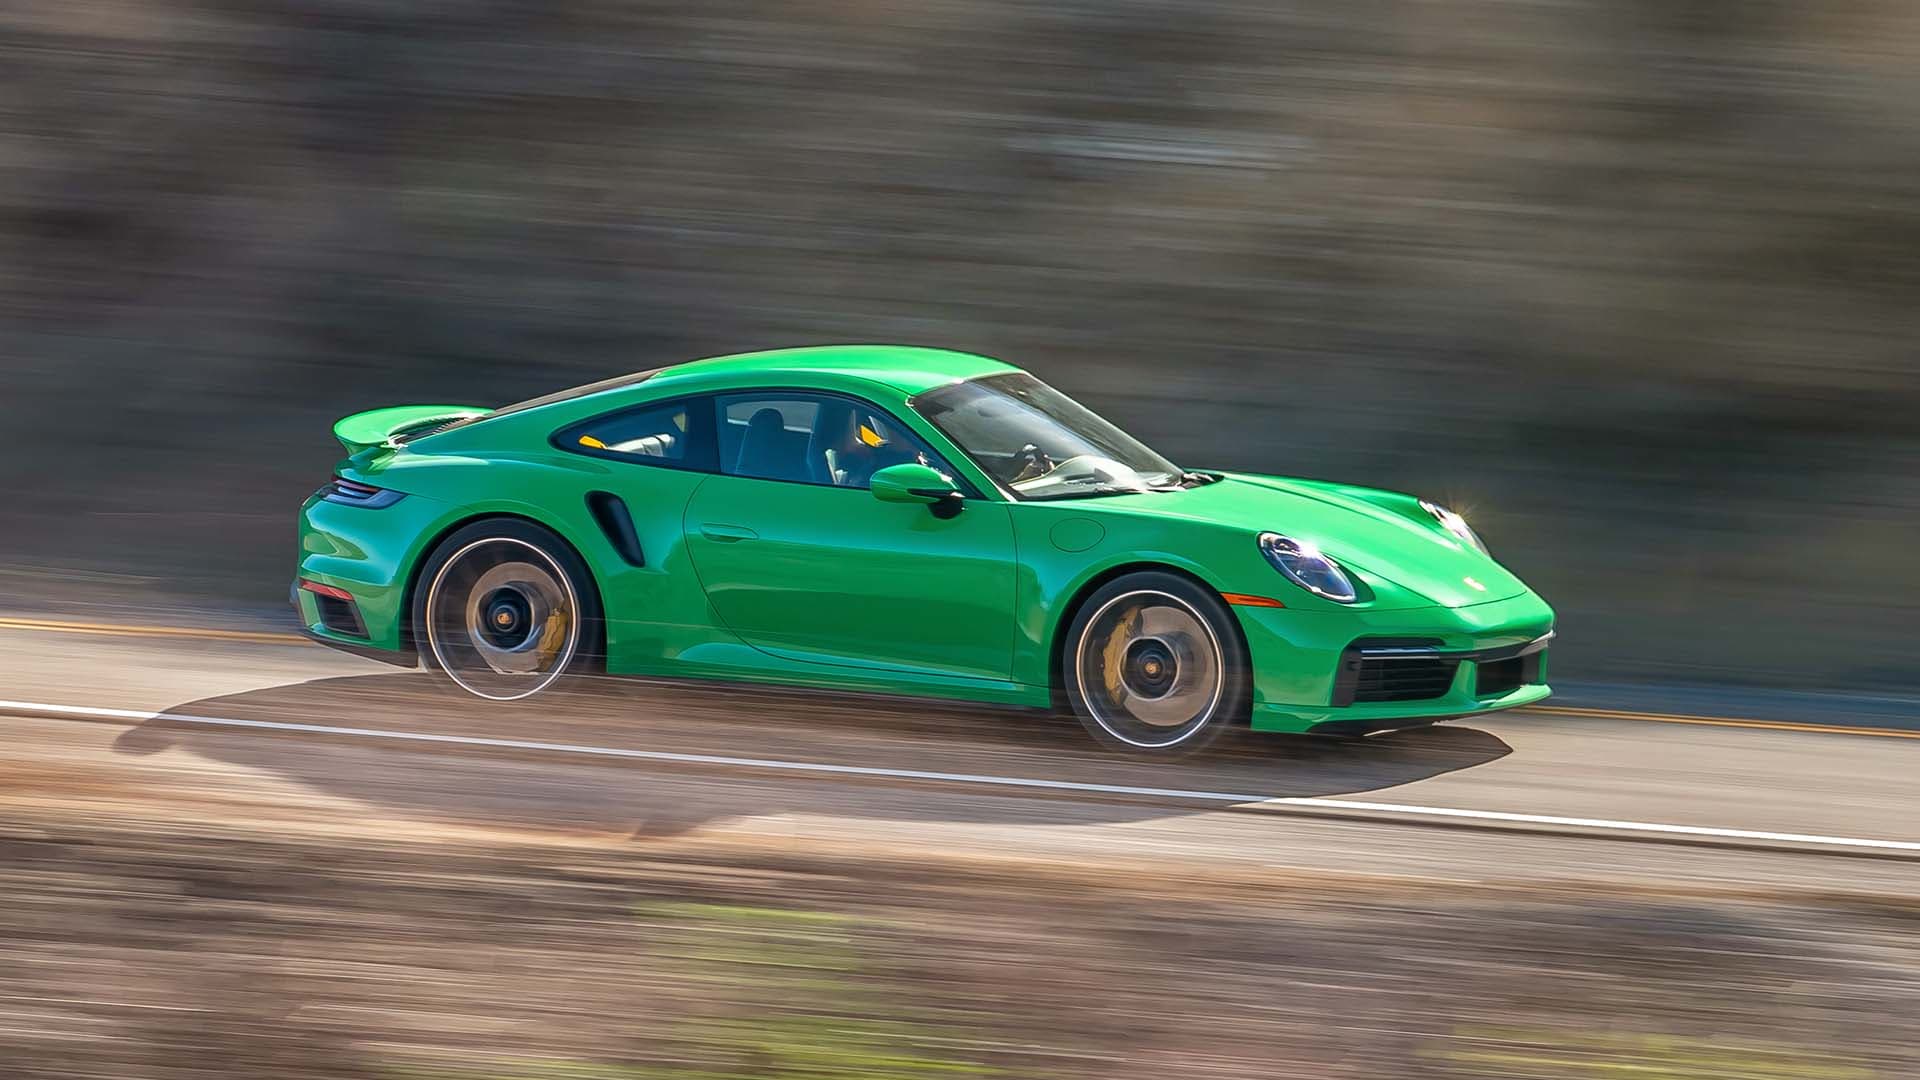 Porsche 911 Hybrid Won’t Be a Plug-In: CEO